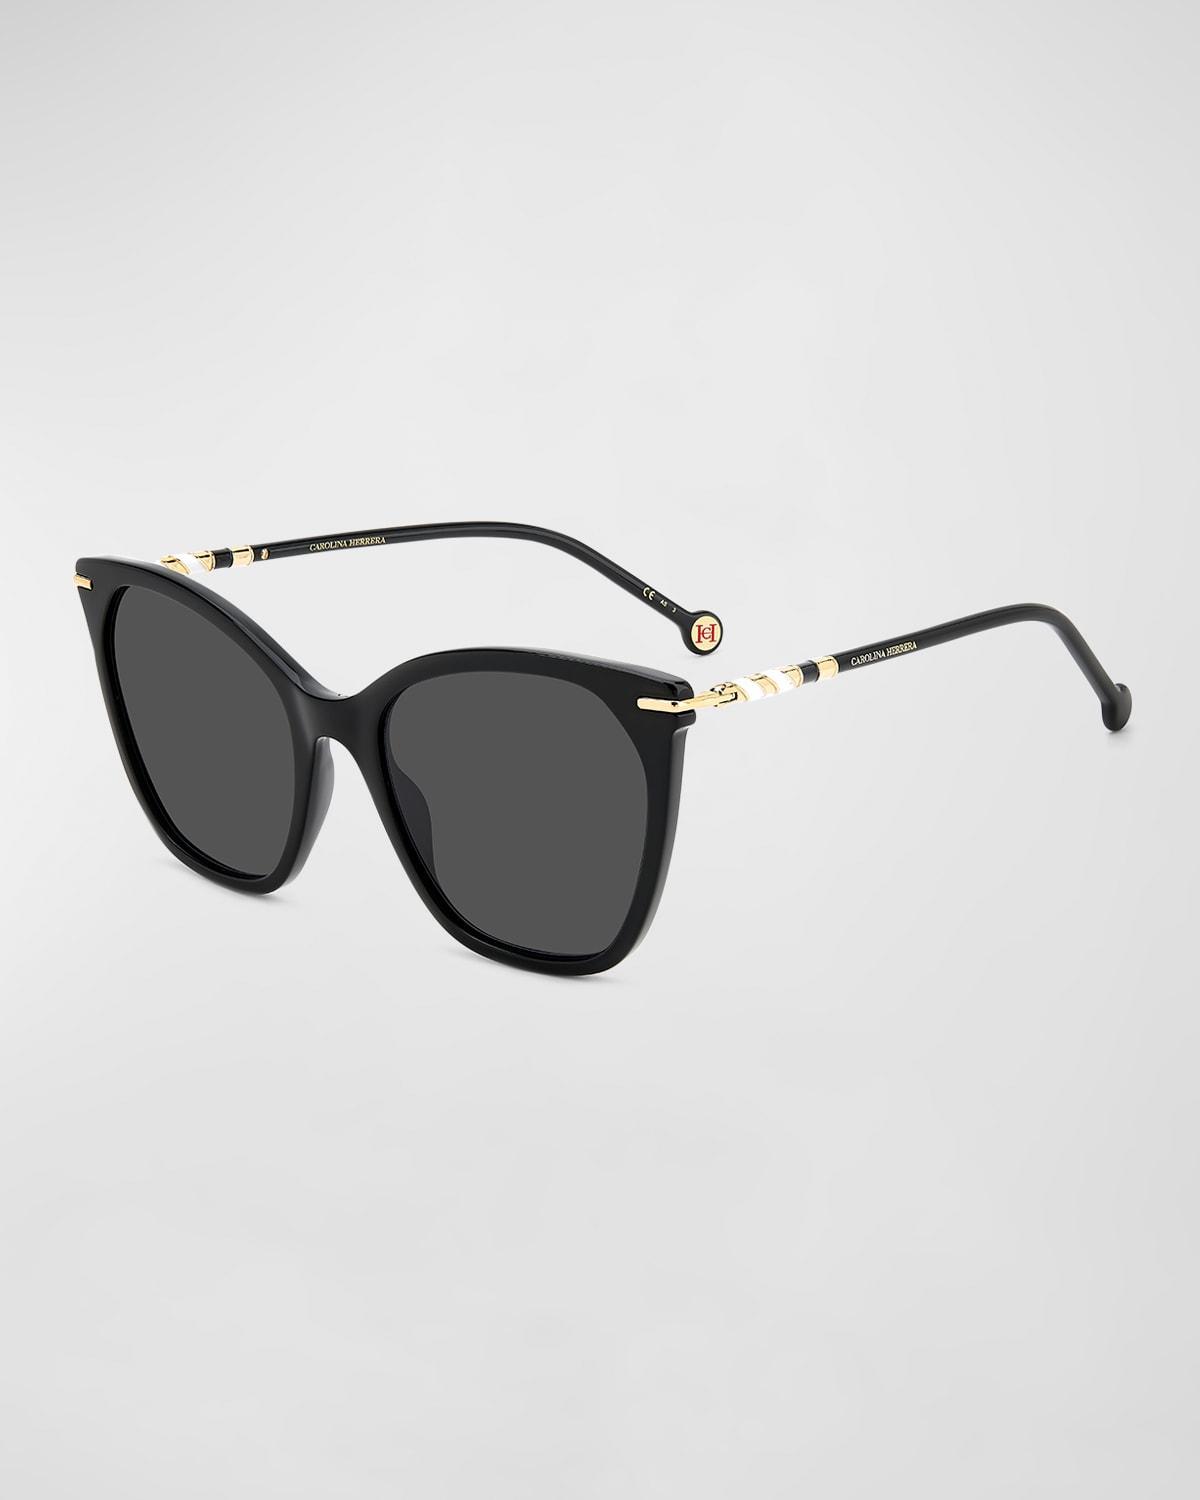 Carolina Herrera Womens Square Sunglasses Product Image